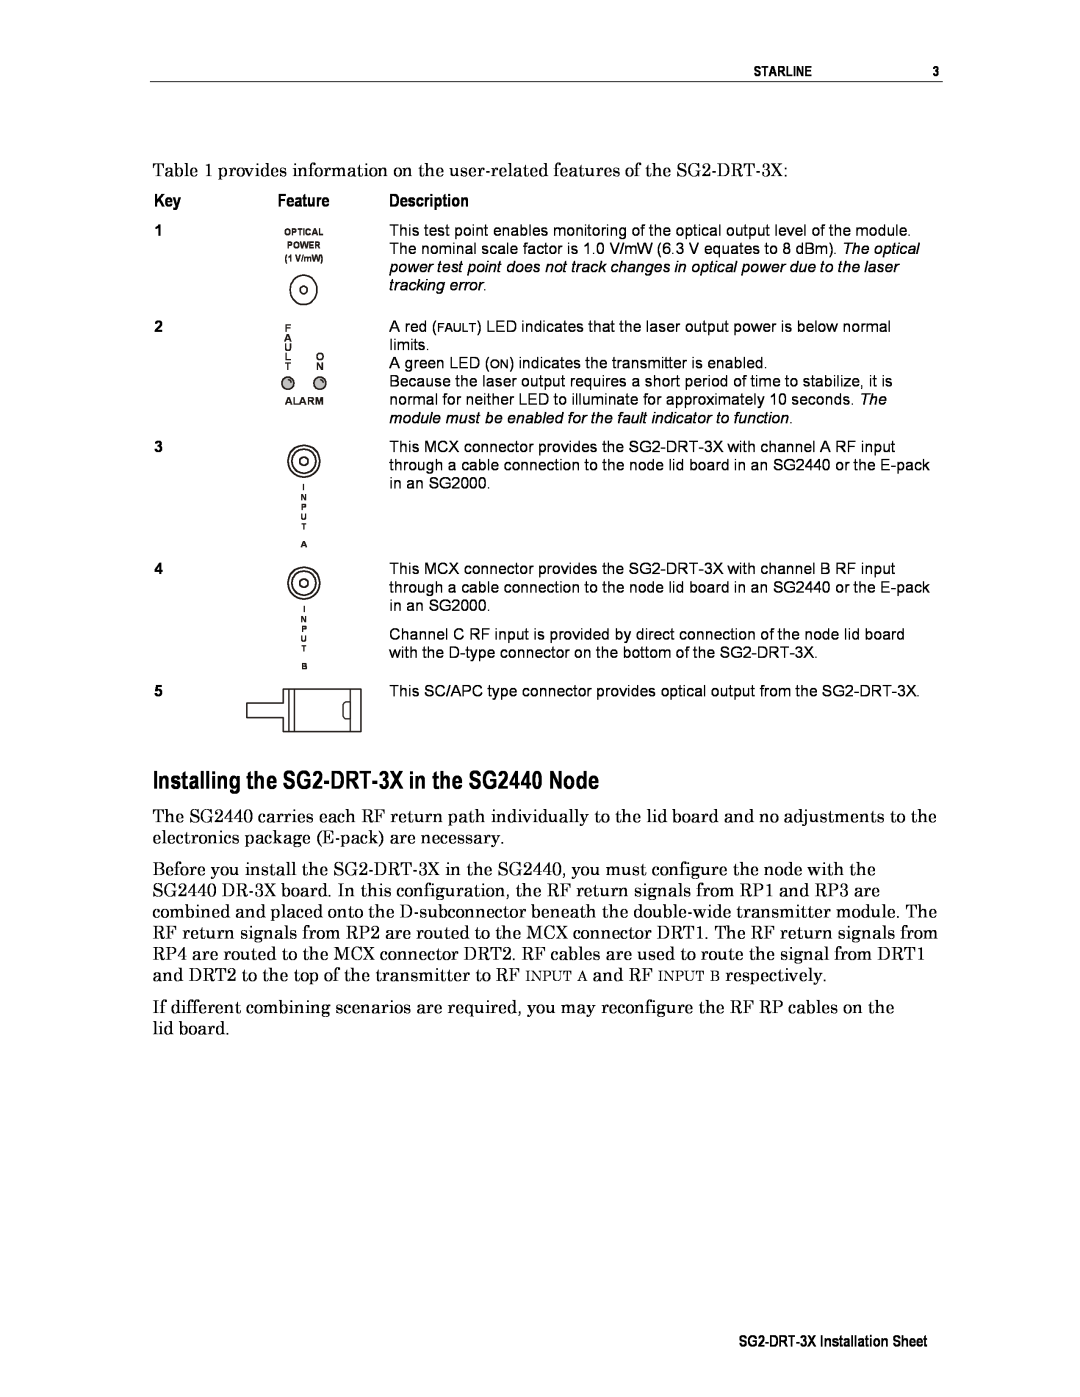 Cuisinart operation manual Installing the SG2-DRT-3Xin the SG2440 Node, KeyFeature, Description 